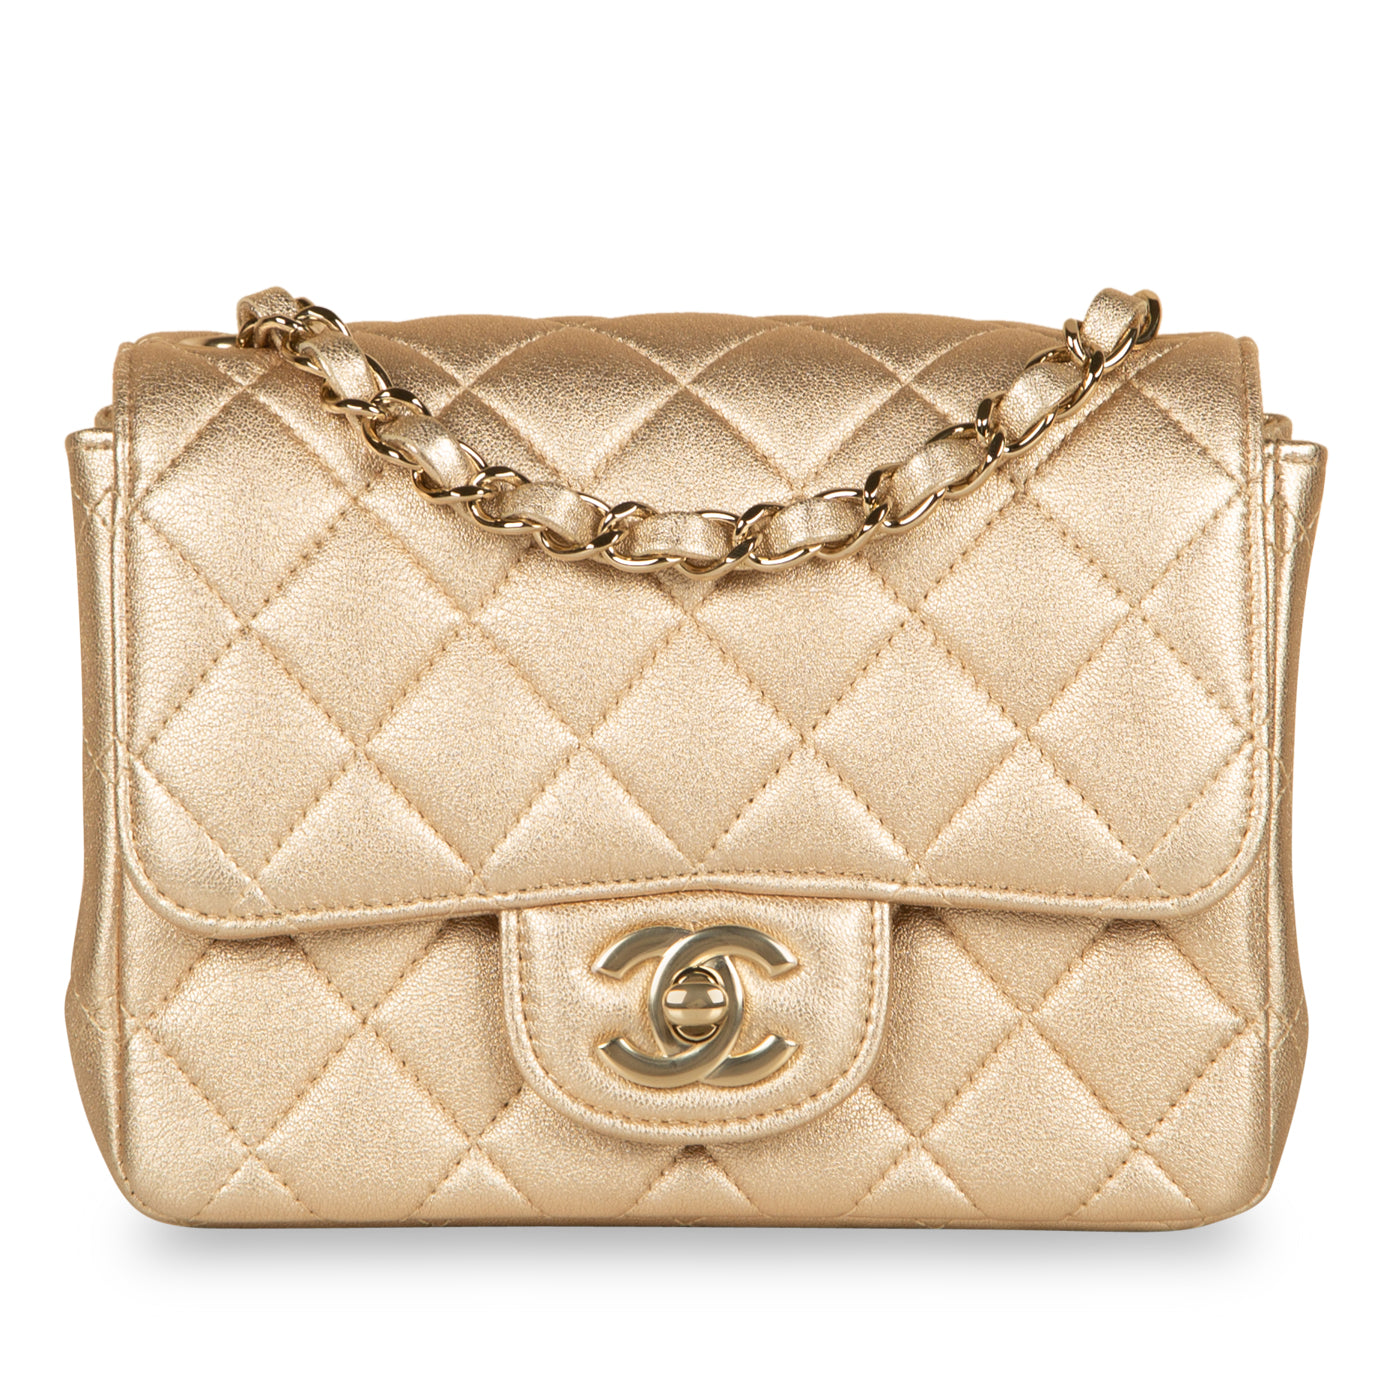 Grained Calfskin GoldTone Metal Beige Large Classic Handbag  CHANEL   Chanel classic flap bag Bags Classic handbags